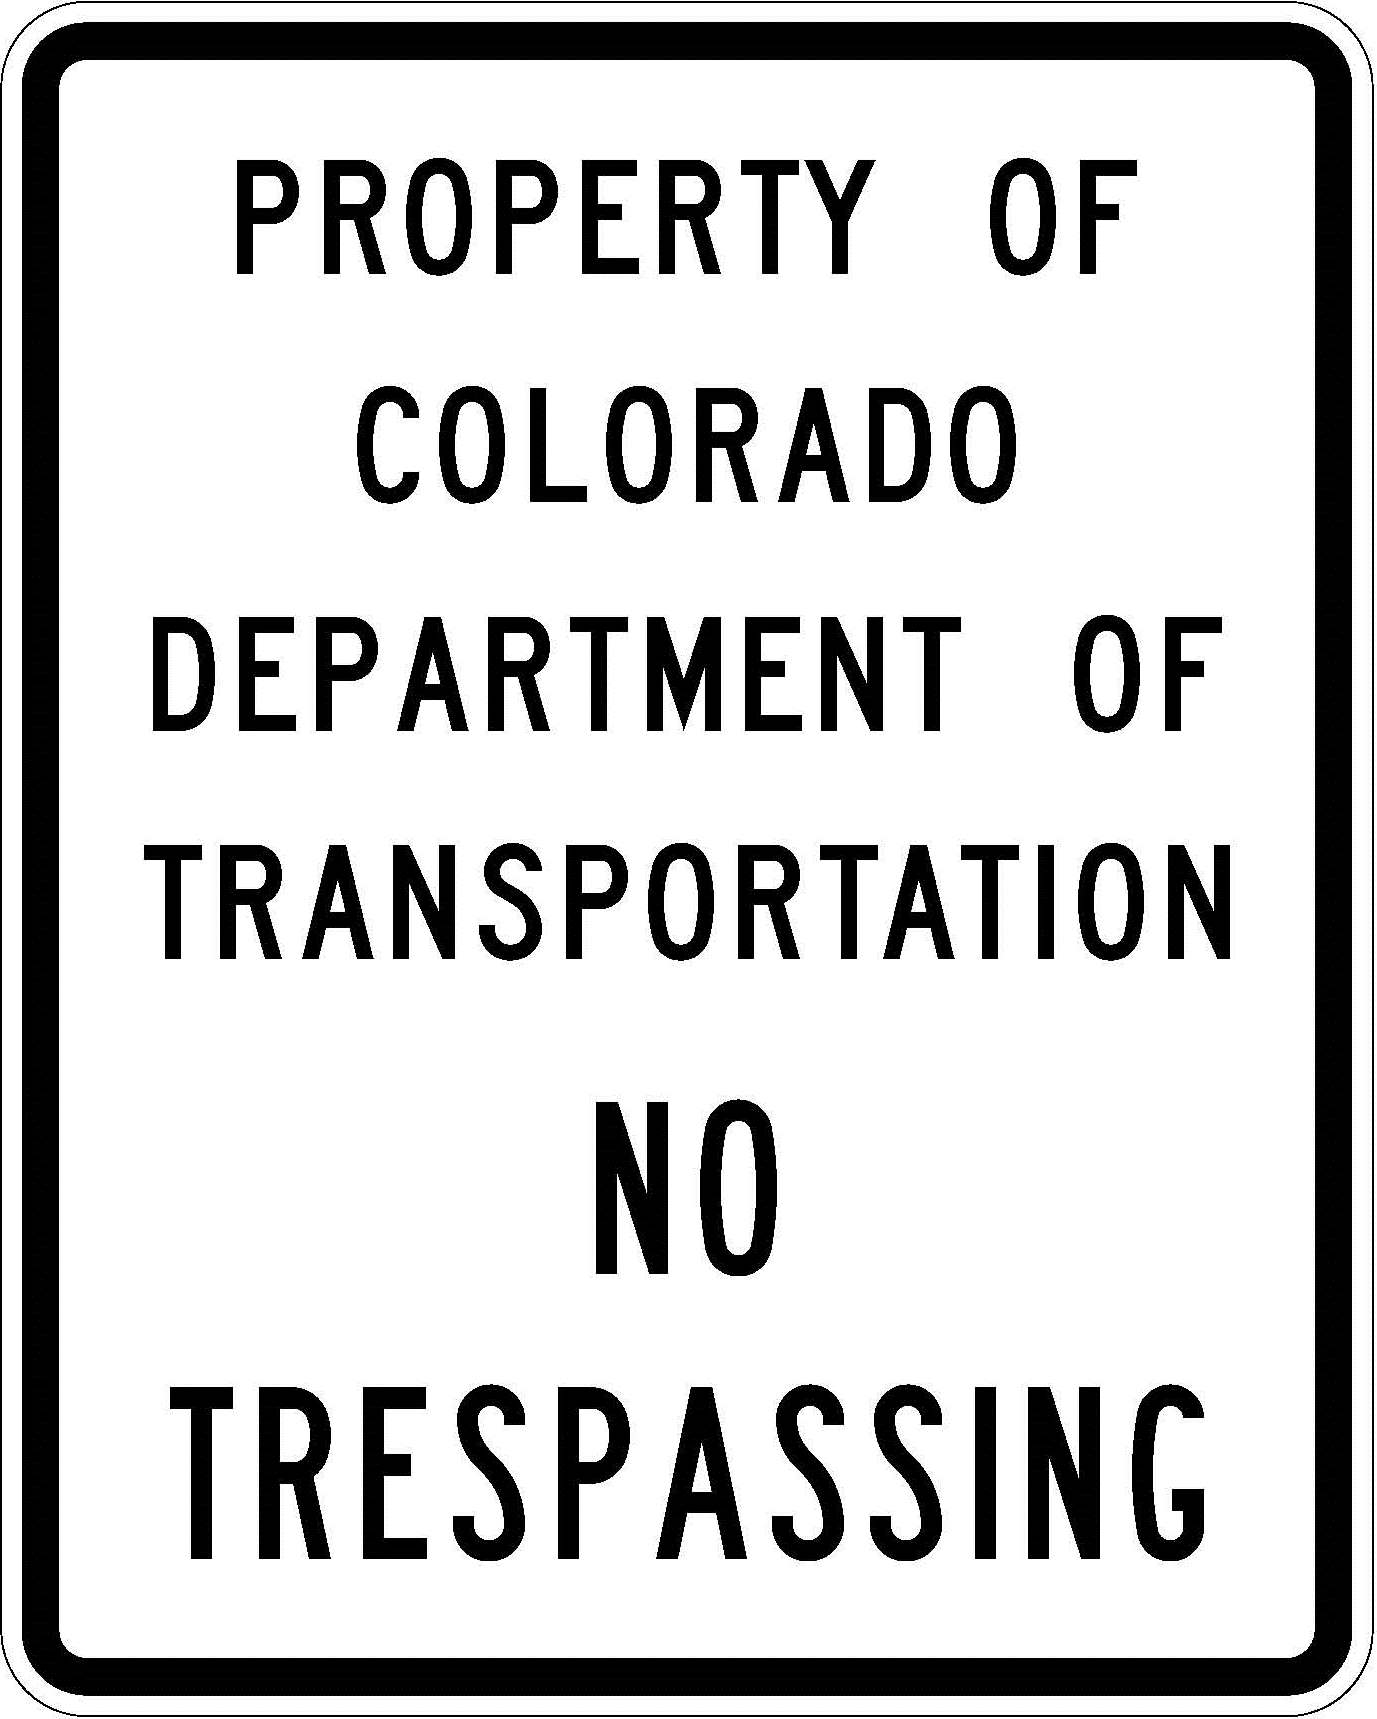 R52-1 Property Of CDOT - No Trespassing JPEG detail image